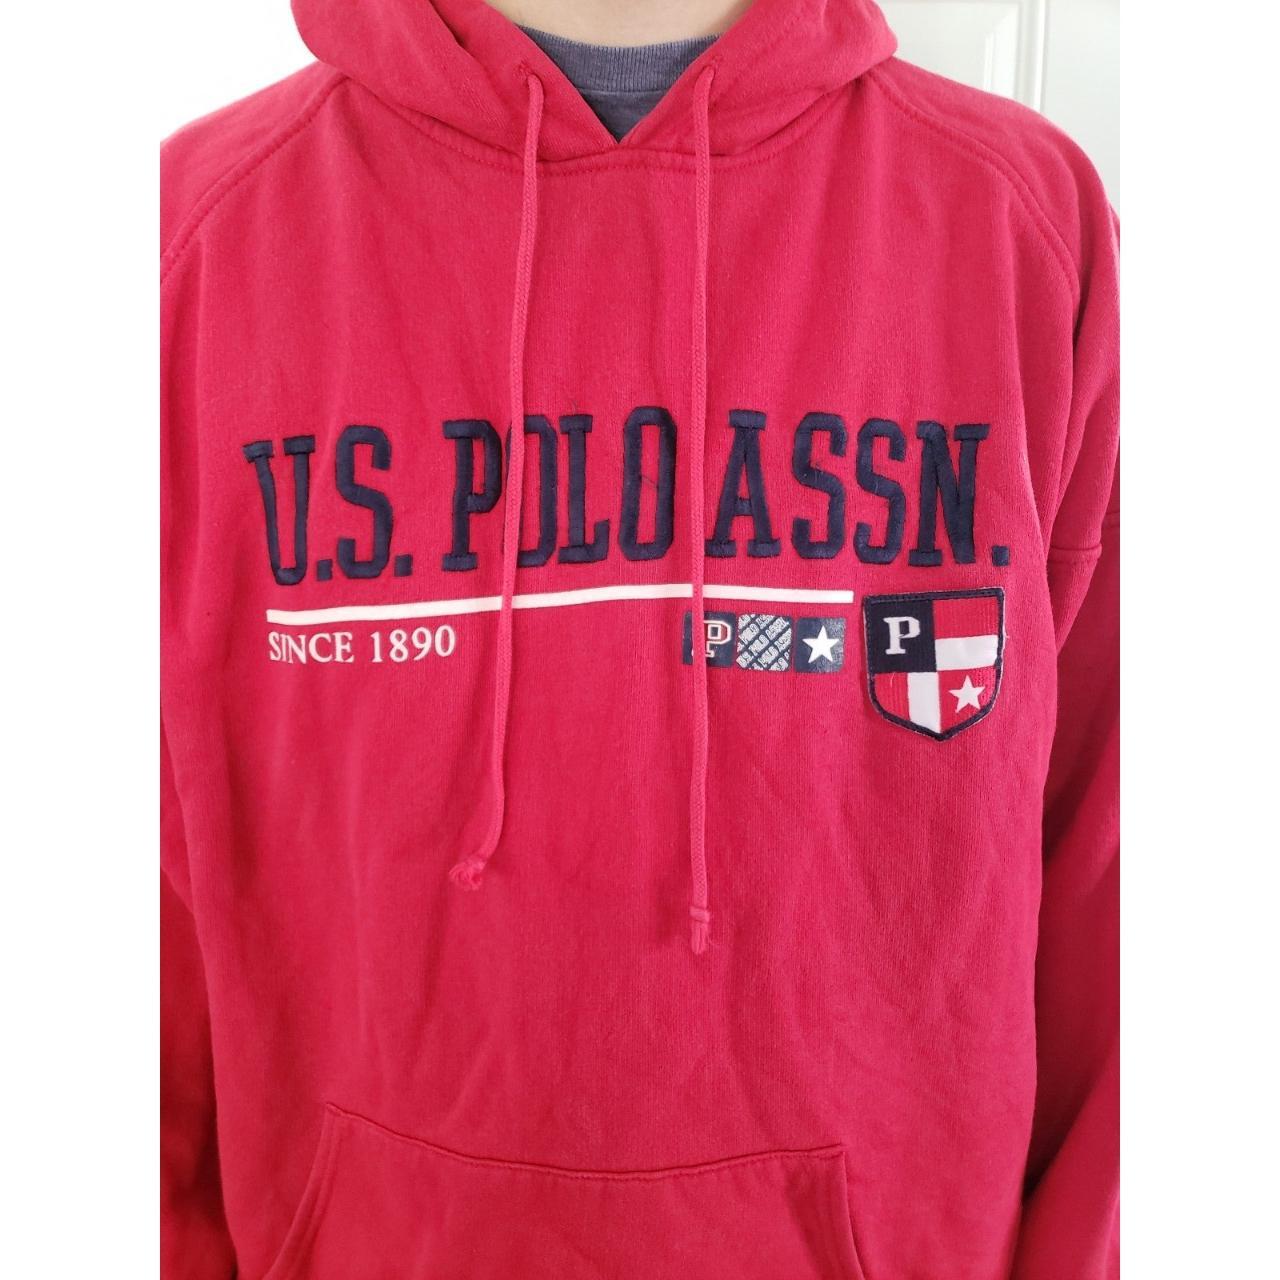 U.S. Polo Assn. Men's Red Sweatshirt (4)